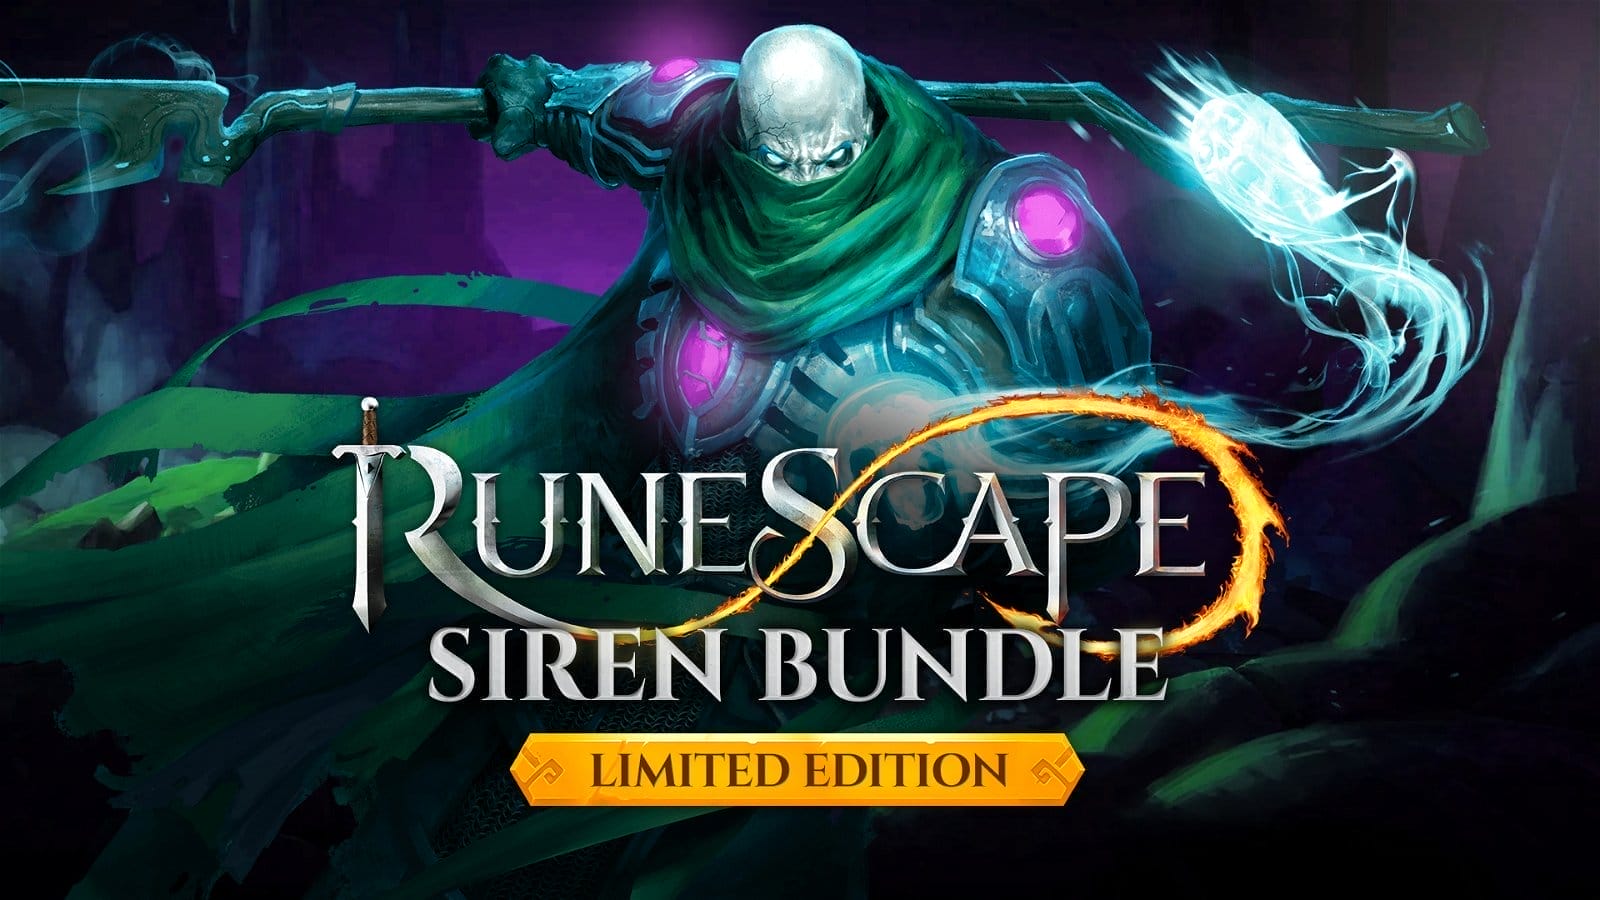 RuneScape Siren Bundle: Limited Edition.